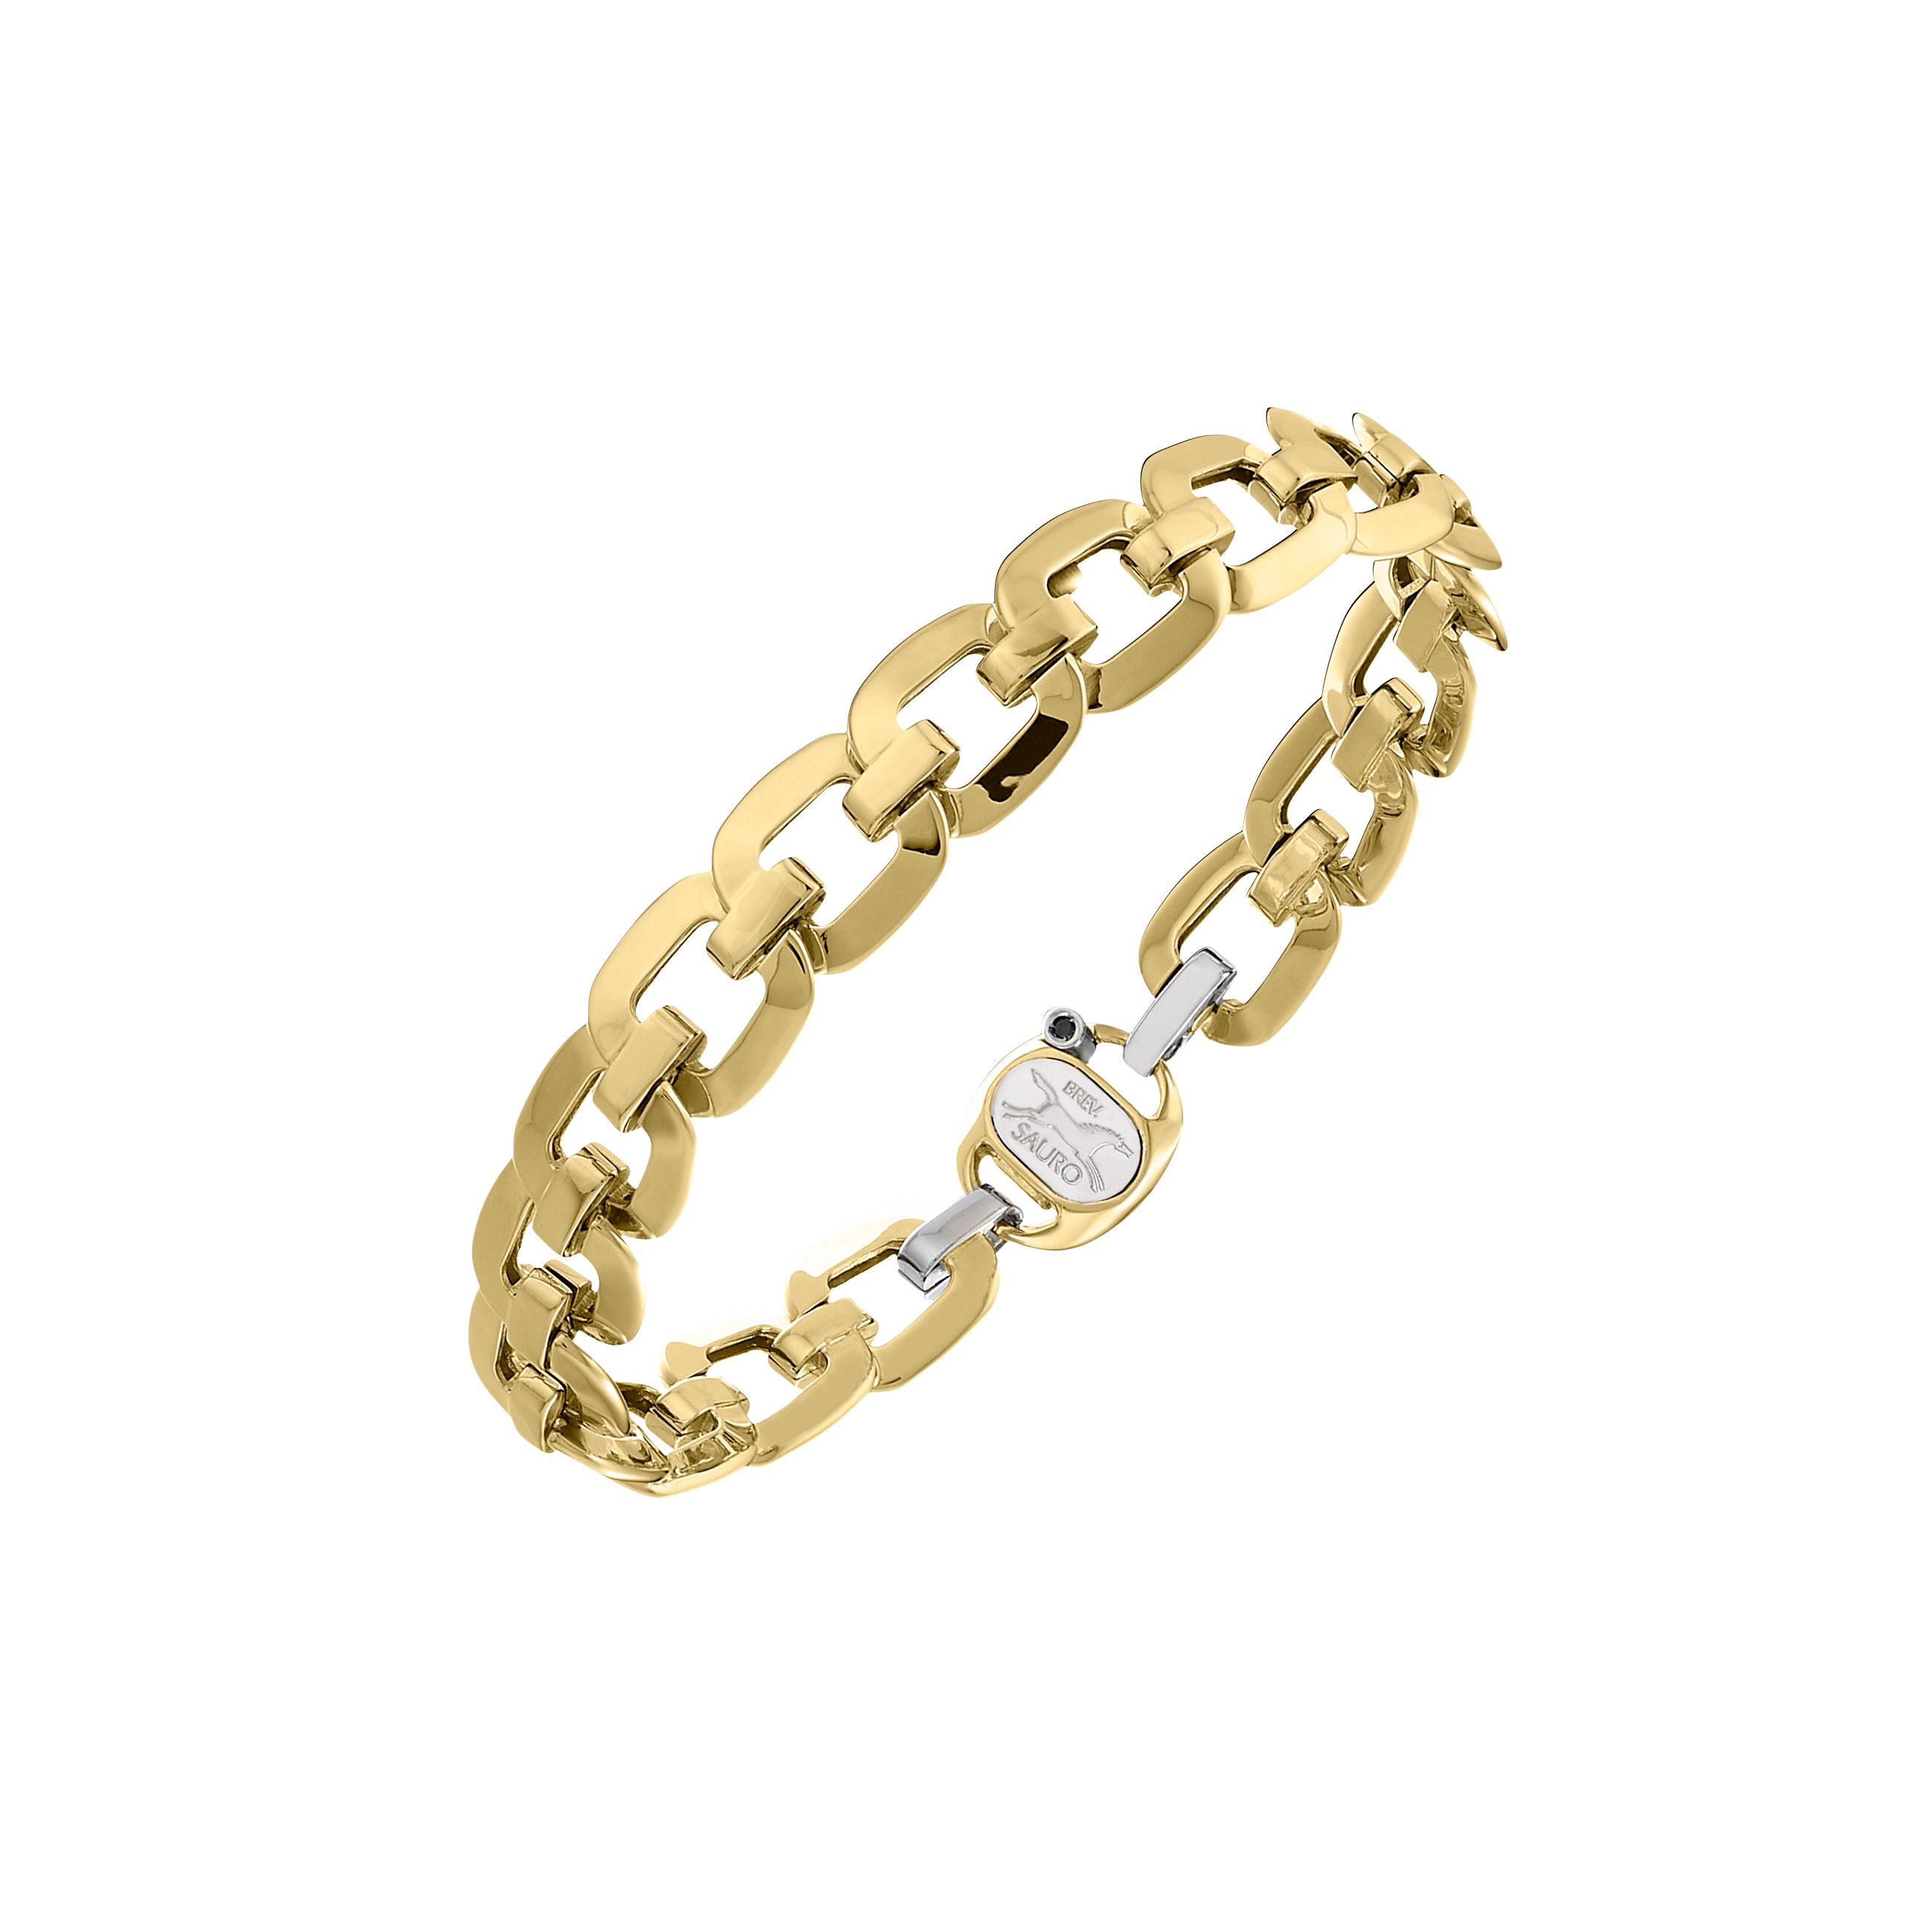 Gold bracelet designs for Men // Bracelets for Men #menjewelry  #braceletsformen #gold #jewellery - YouTube